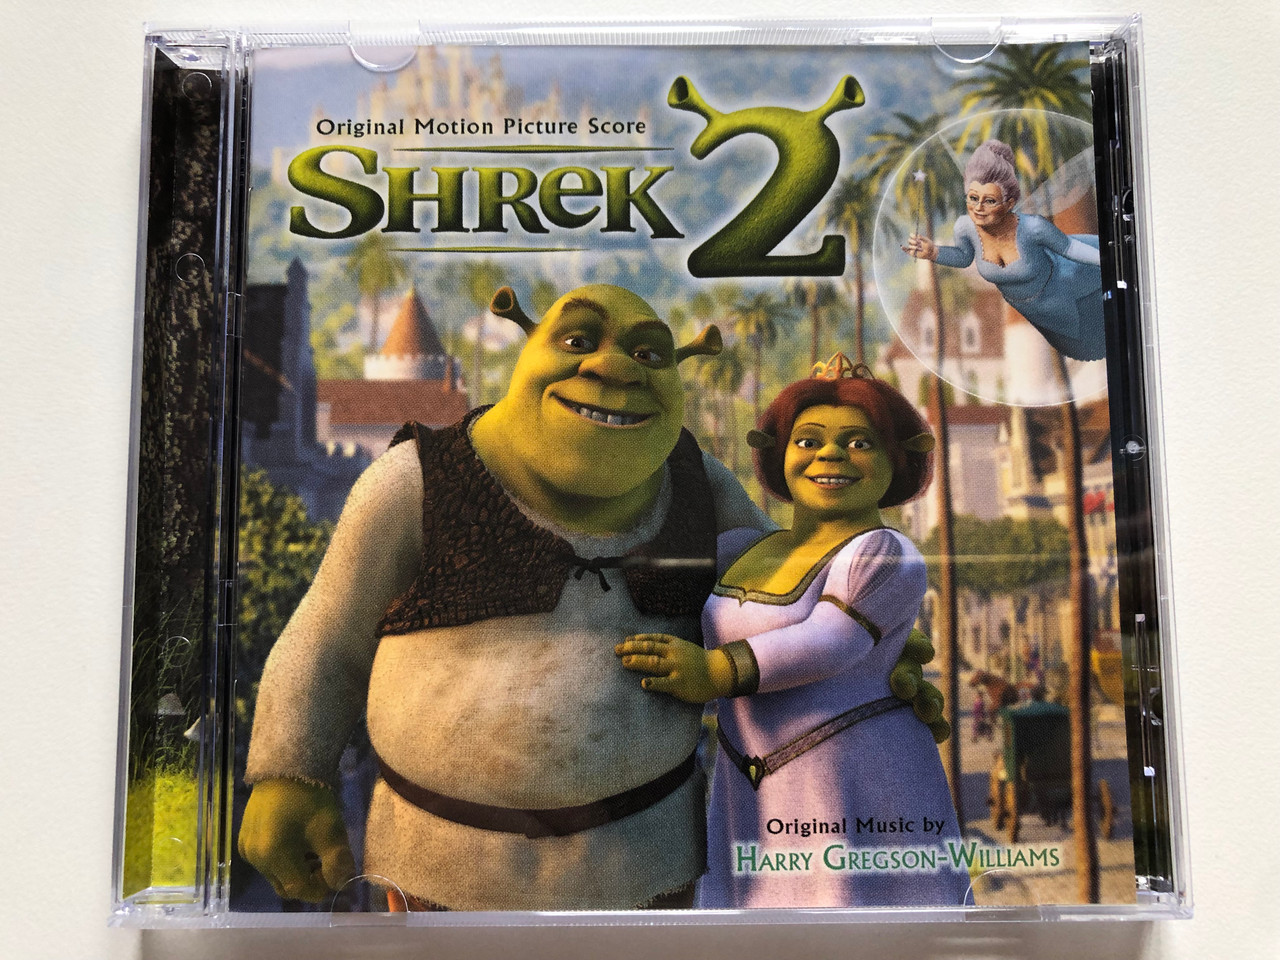 Shrek 2 (Original Motion Picture Score) - Original Music by Harry Gregson-Williams / Varèse Audio CD 2004 / VSD-6629 bibleinmylanguage